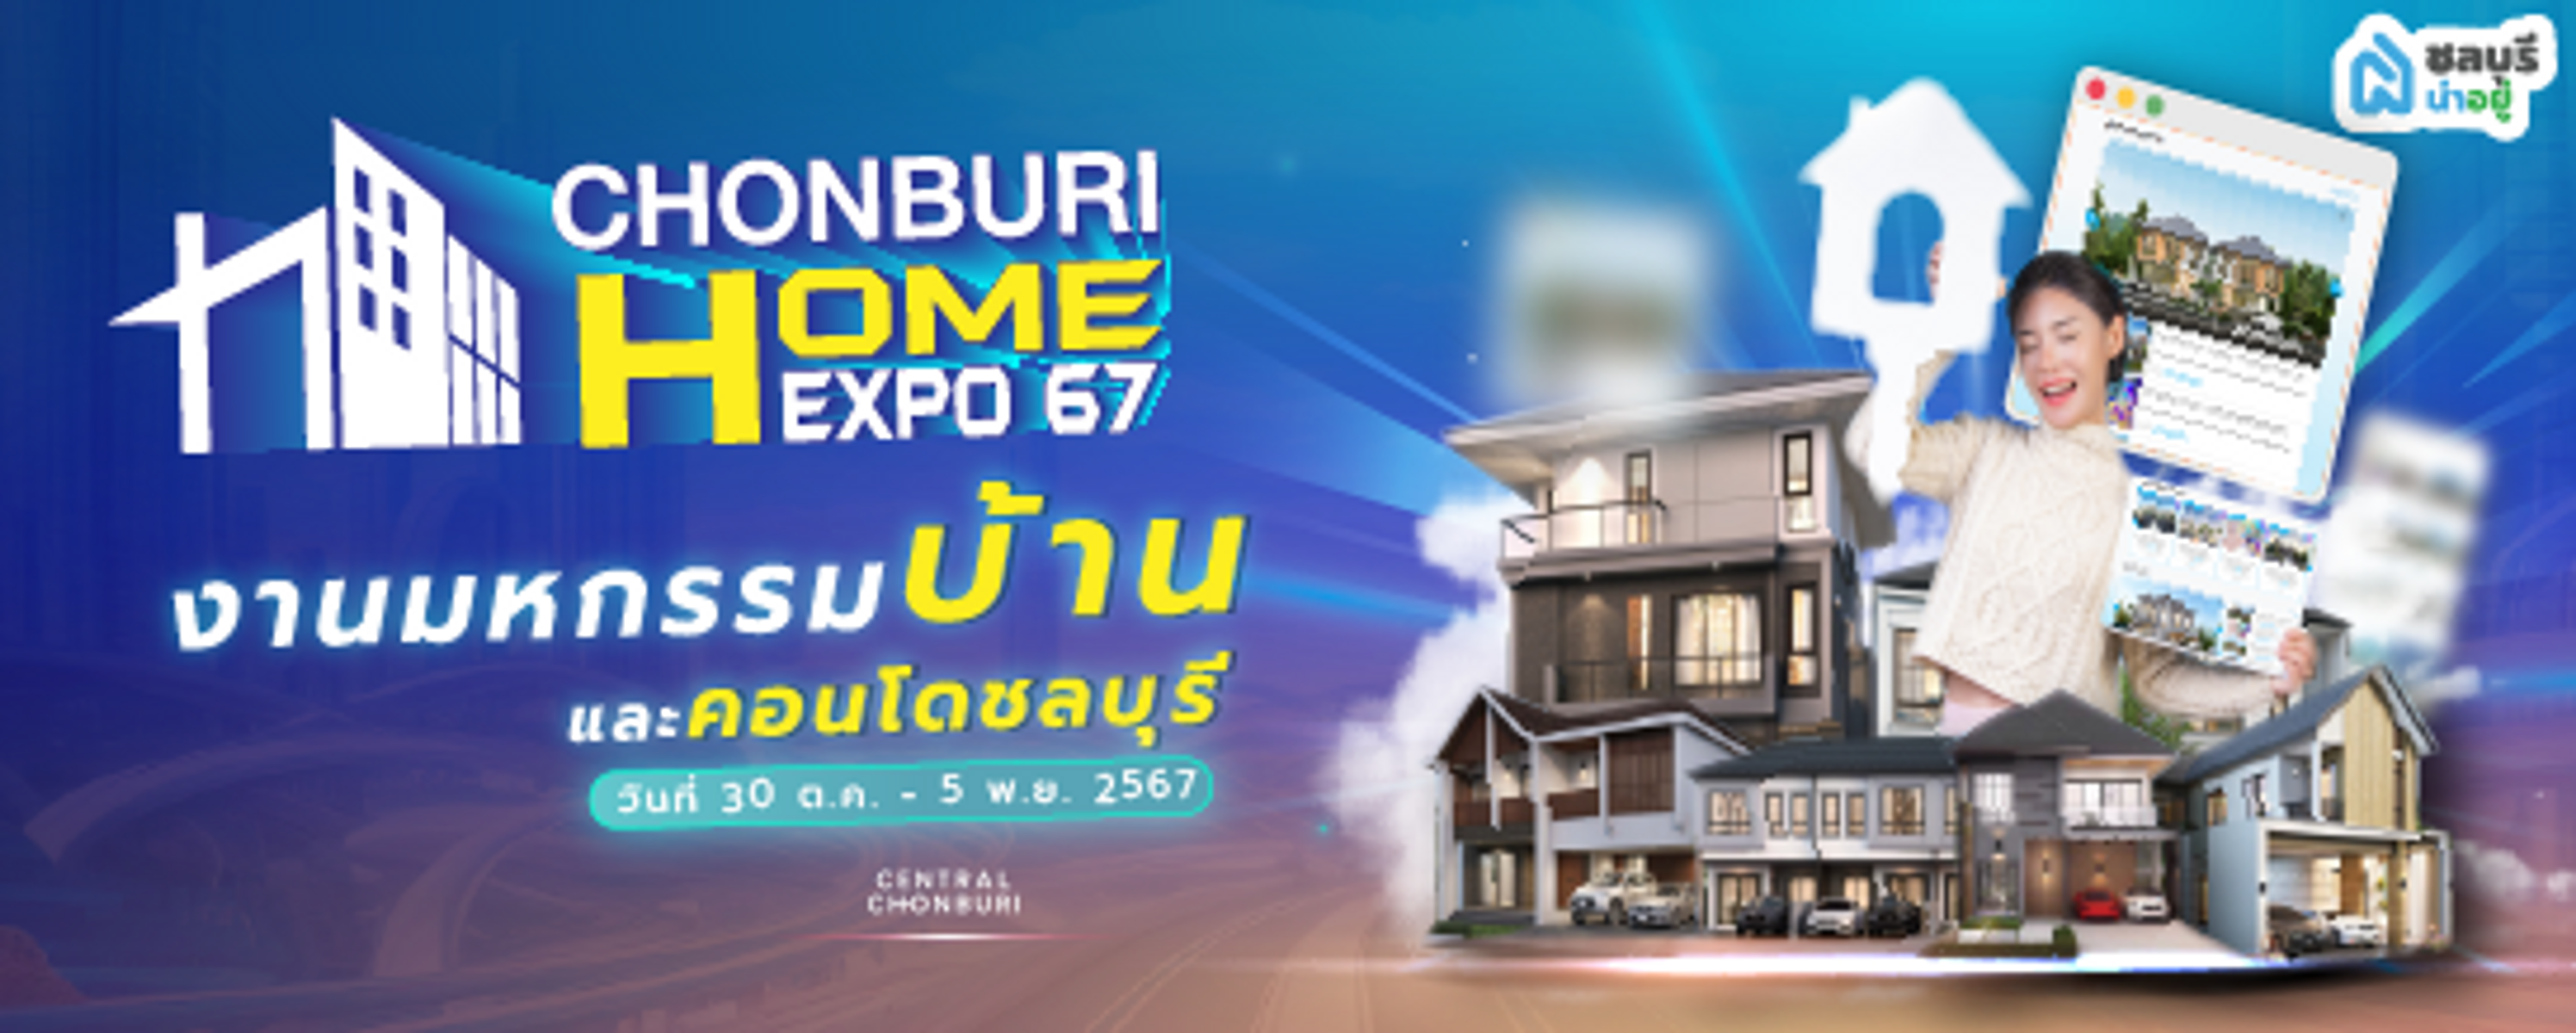 Banner C Chonburi Home Expo 67